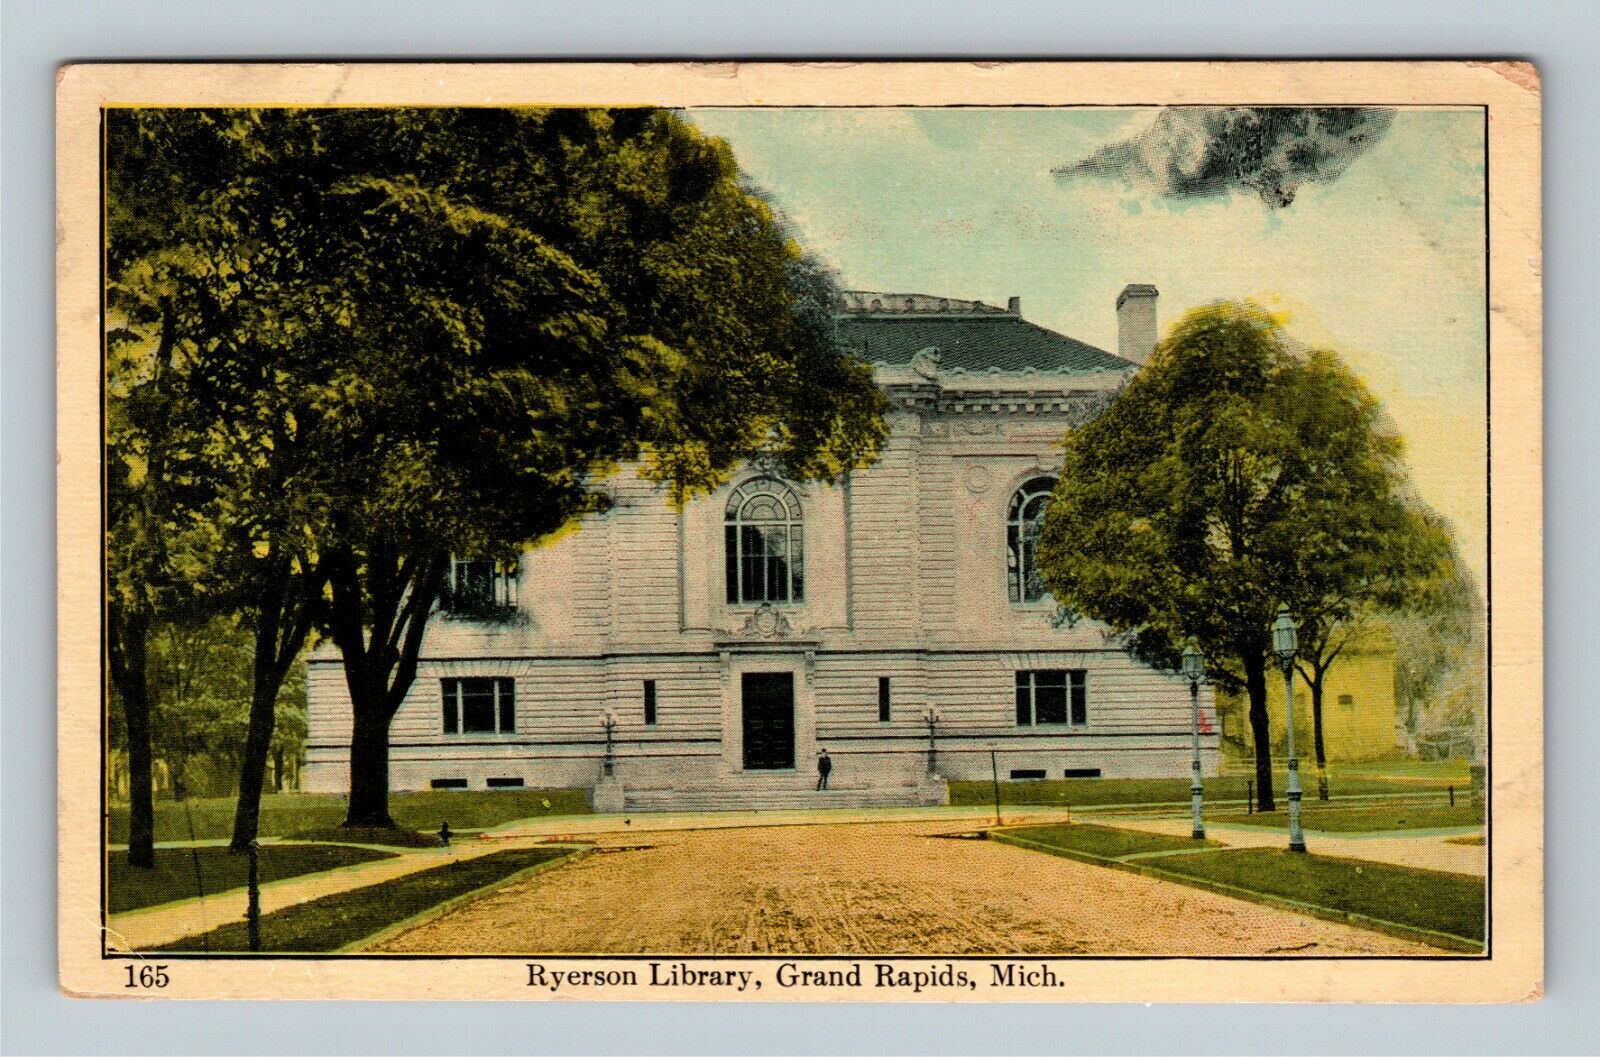 Grand Rapids MI, Historic Ryerson Library Opened 1904, Michigan Vintage Postcard